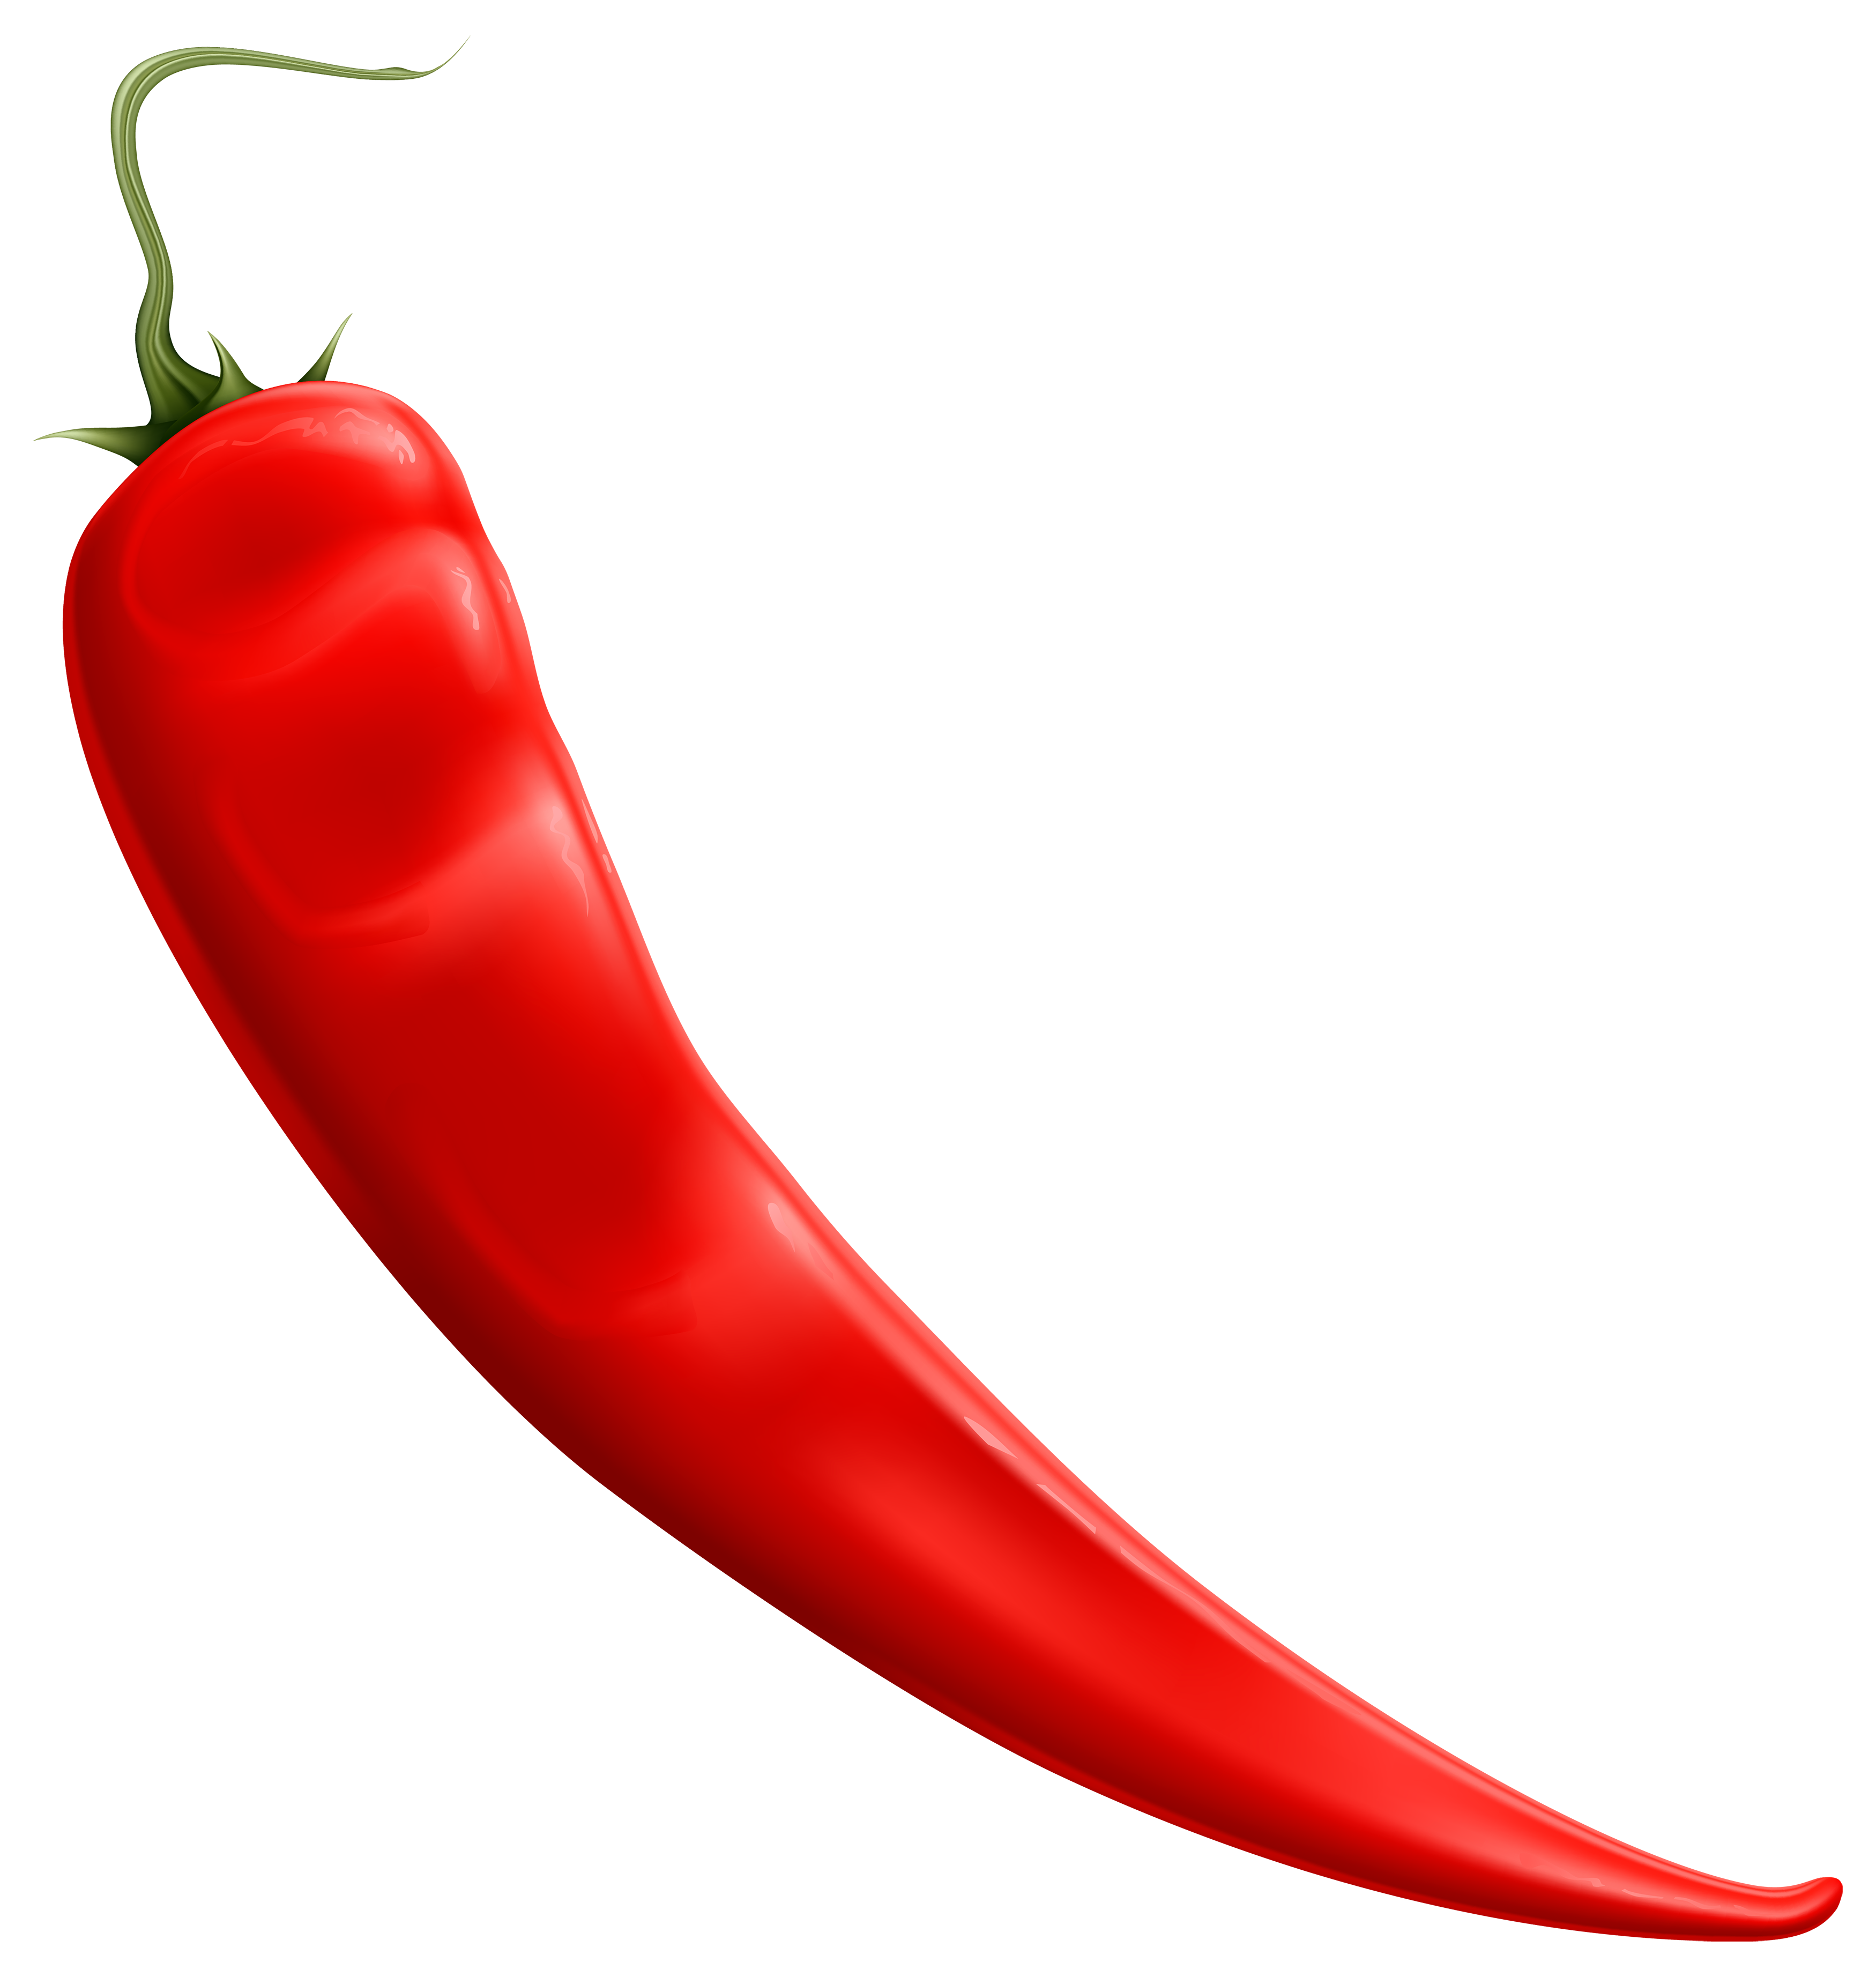 Red Chili Pepper Web Hd Photo Clipart